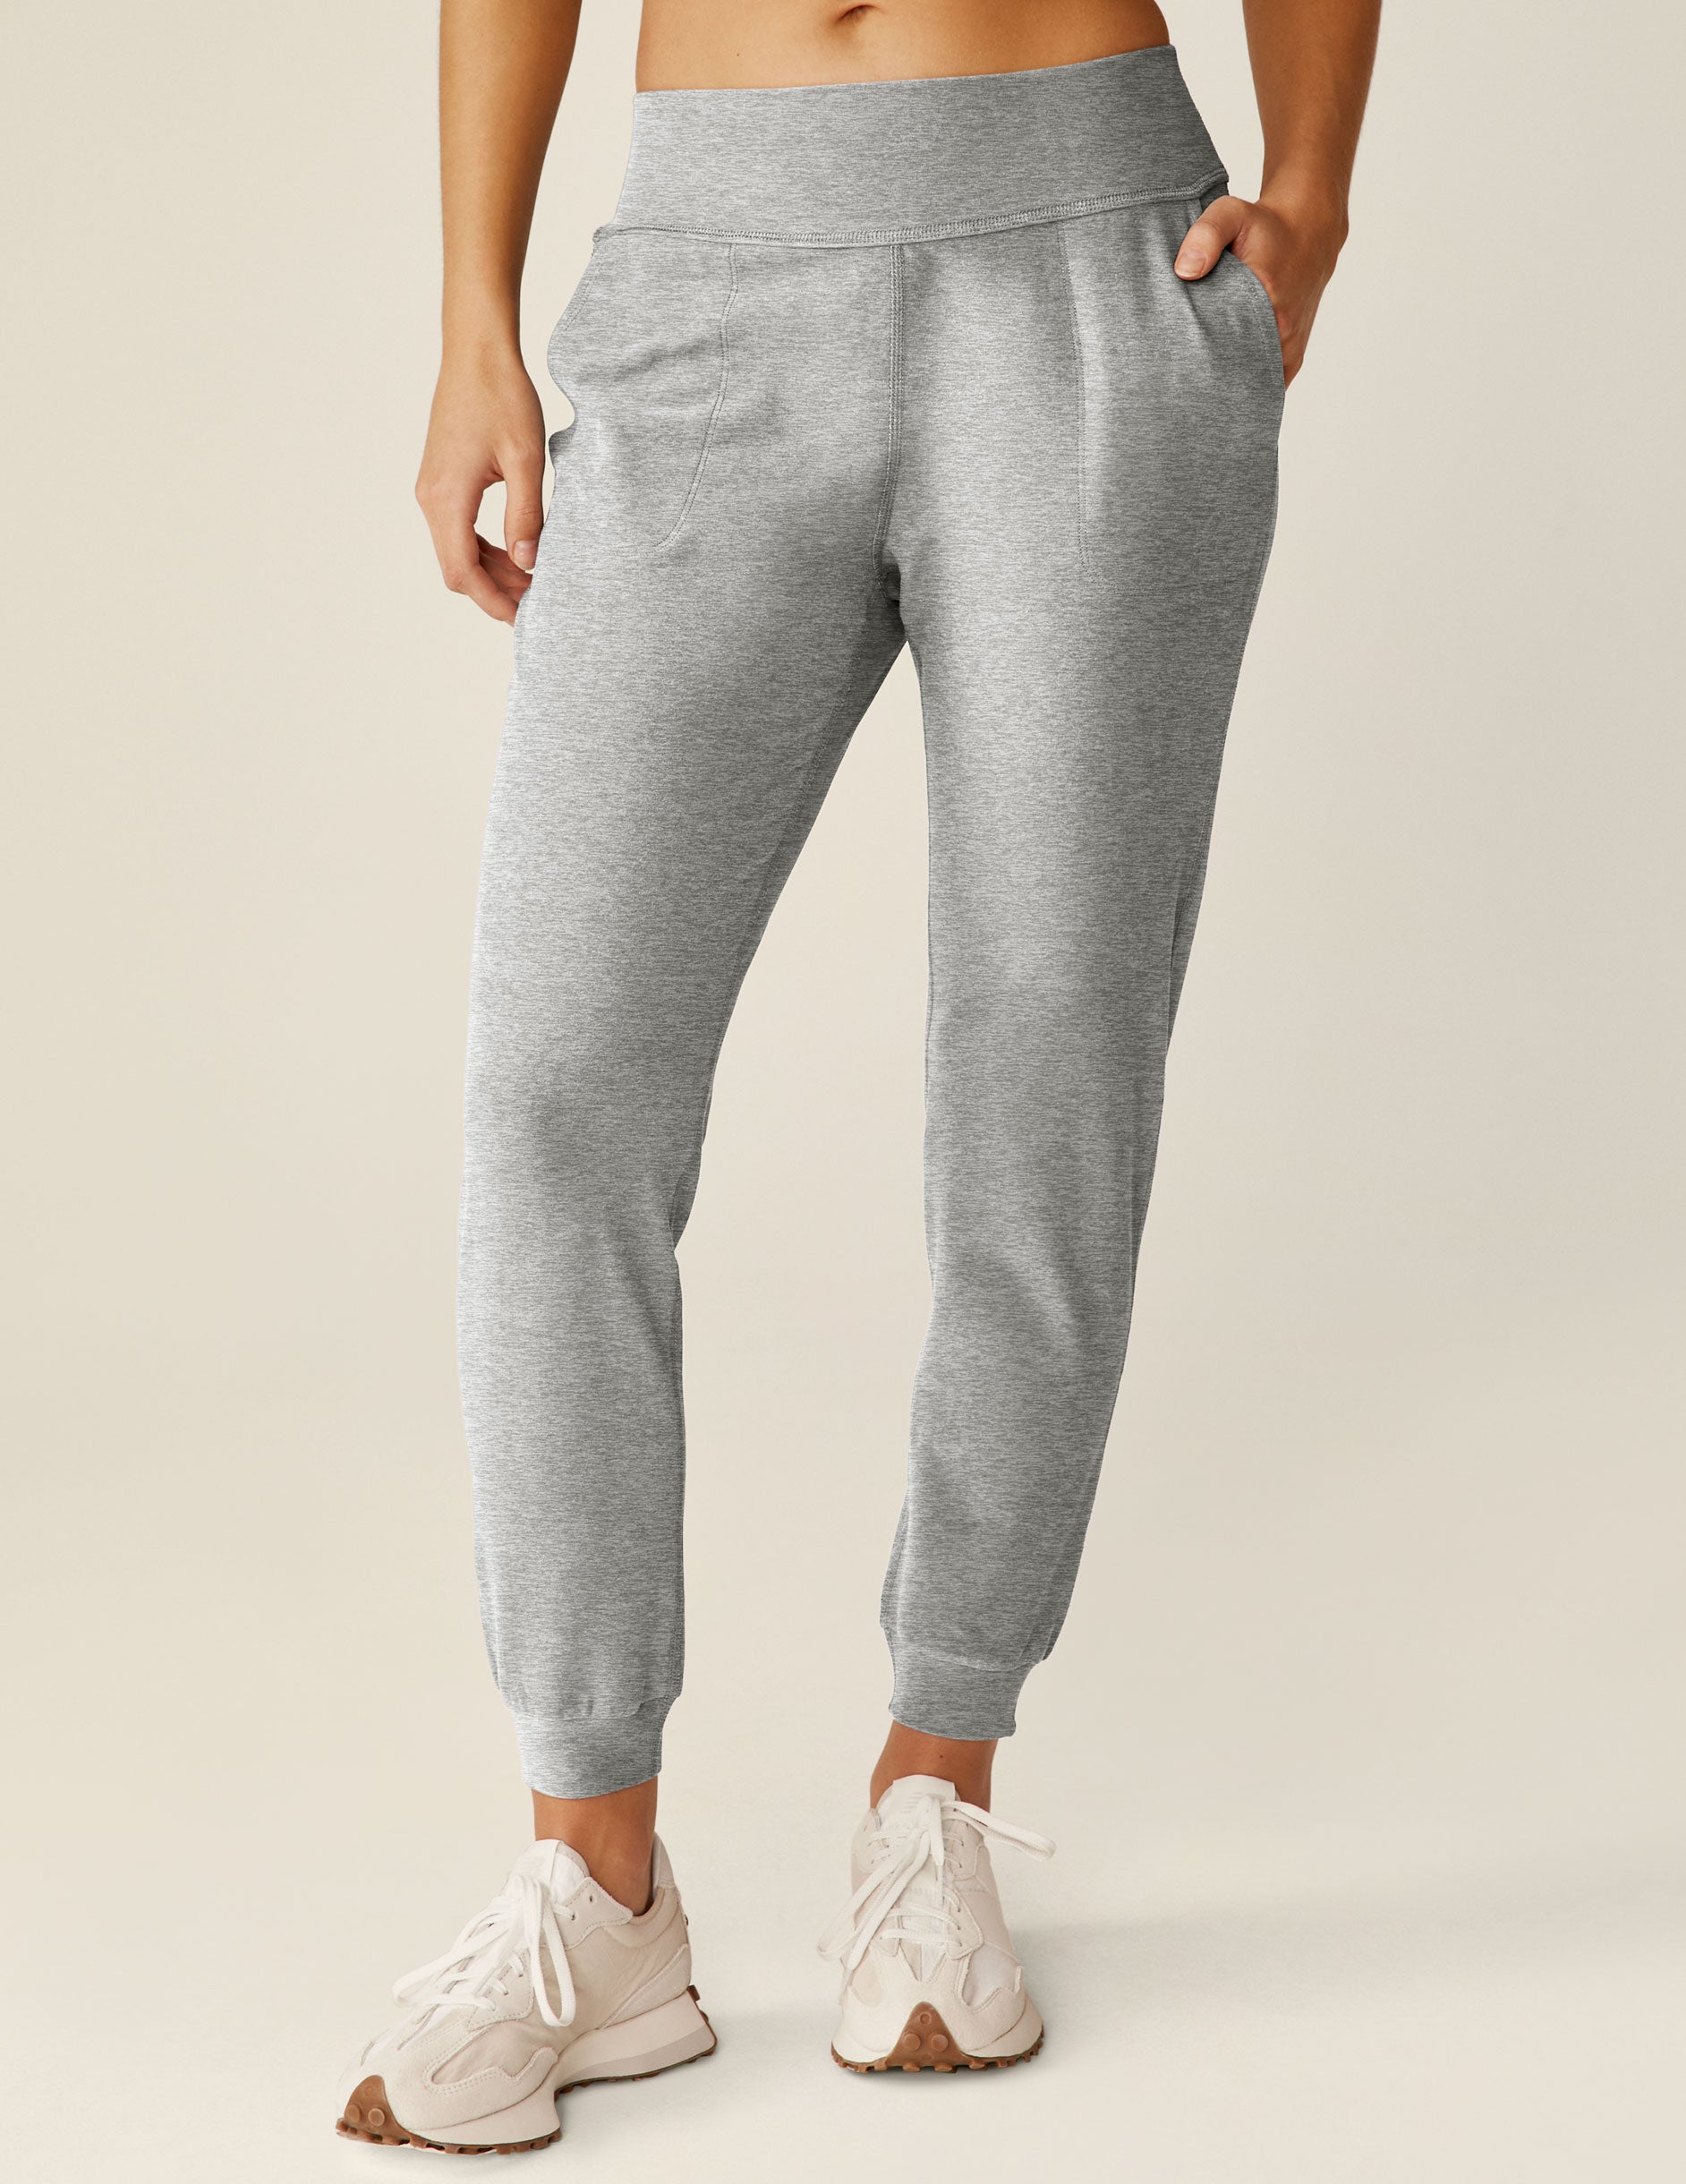 grey high-waisted midi length jogger pants with pockets. 